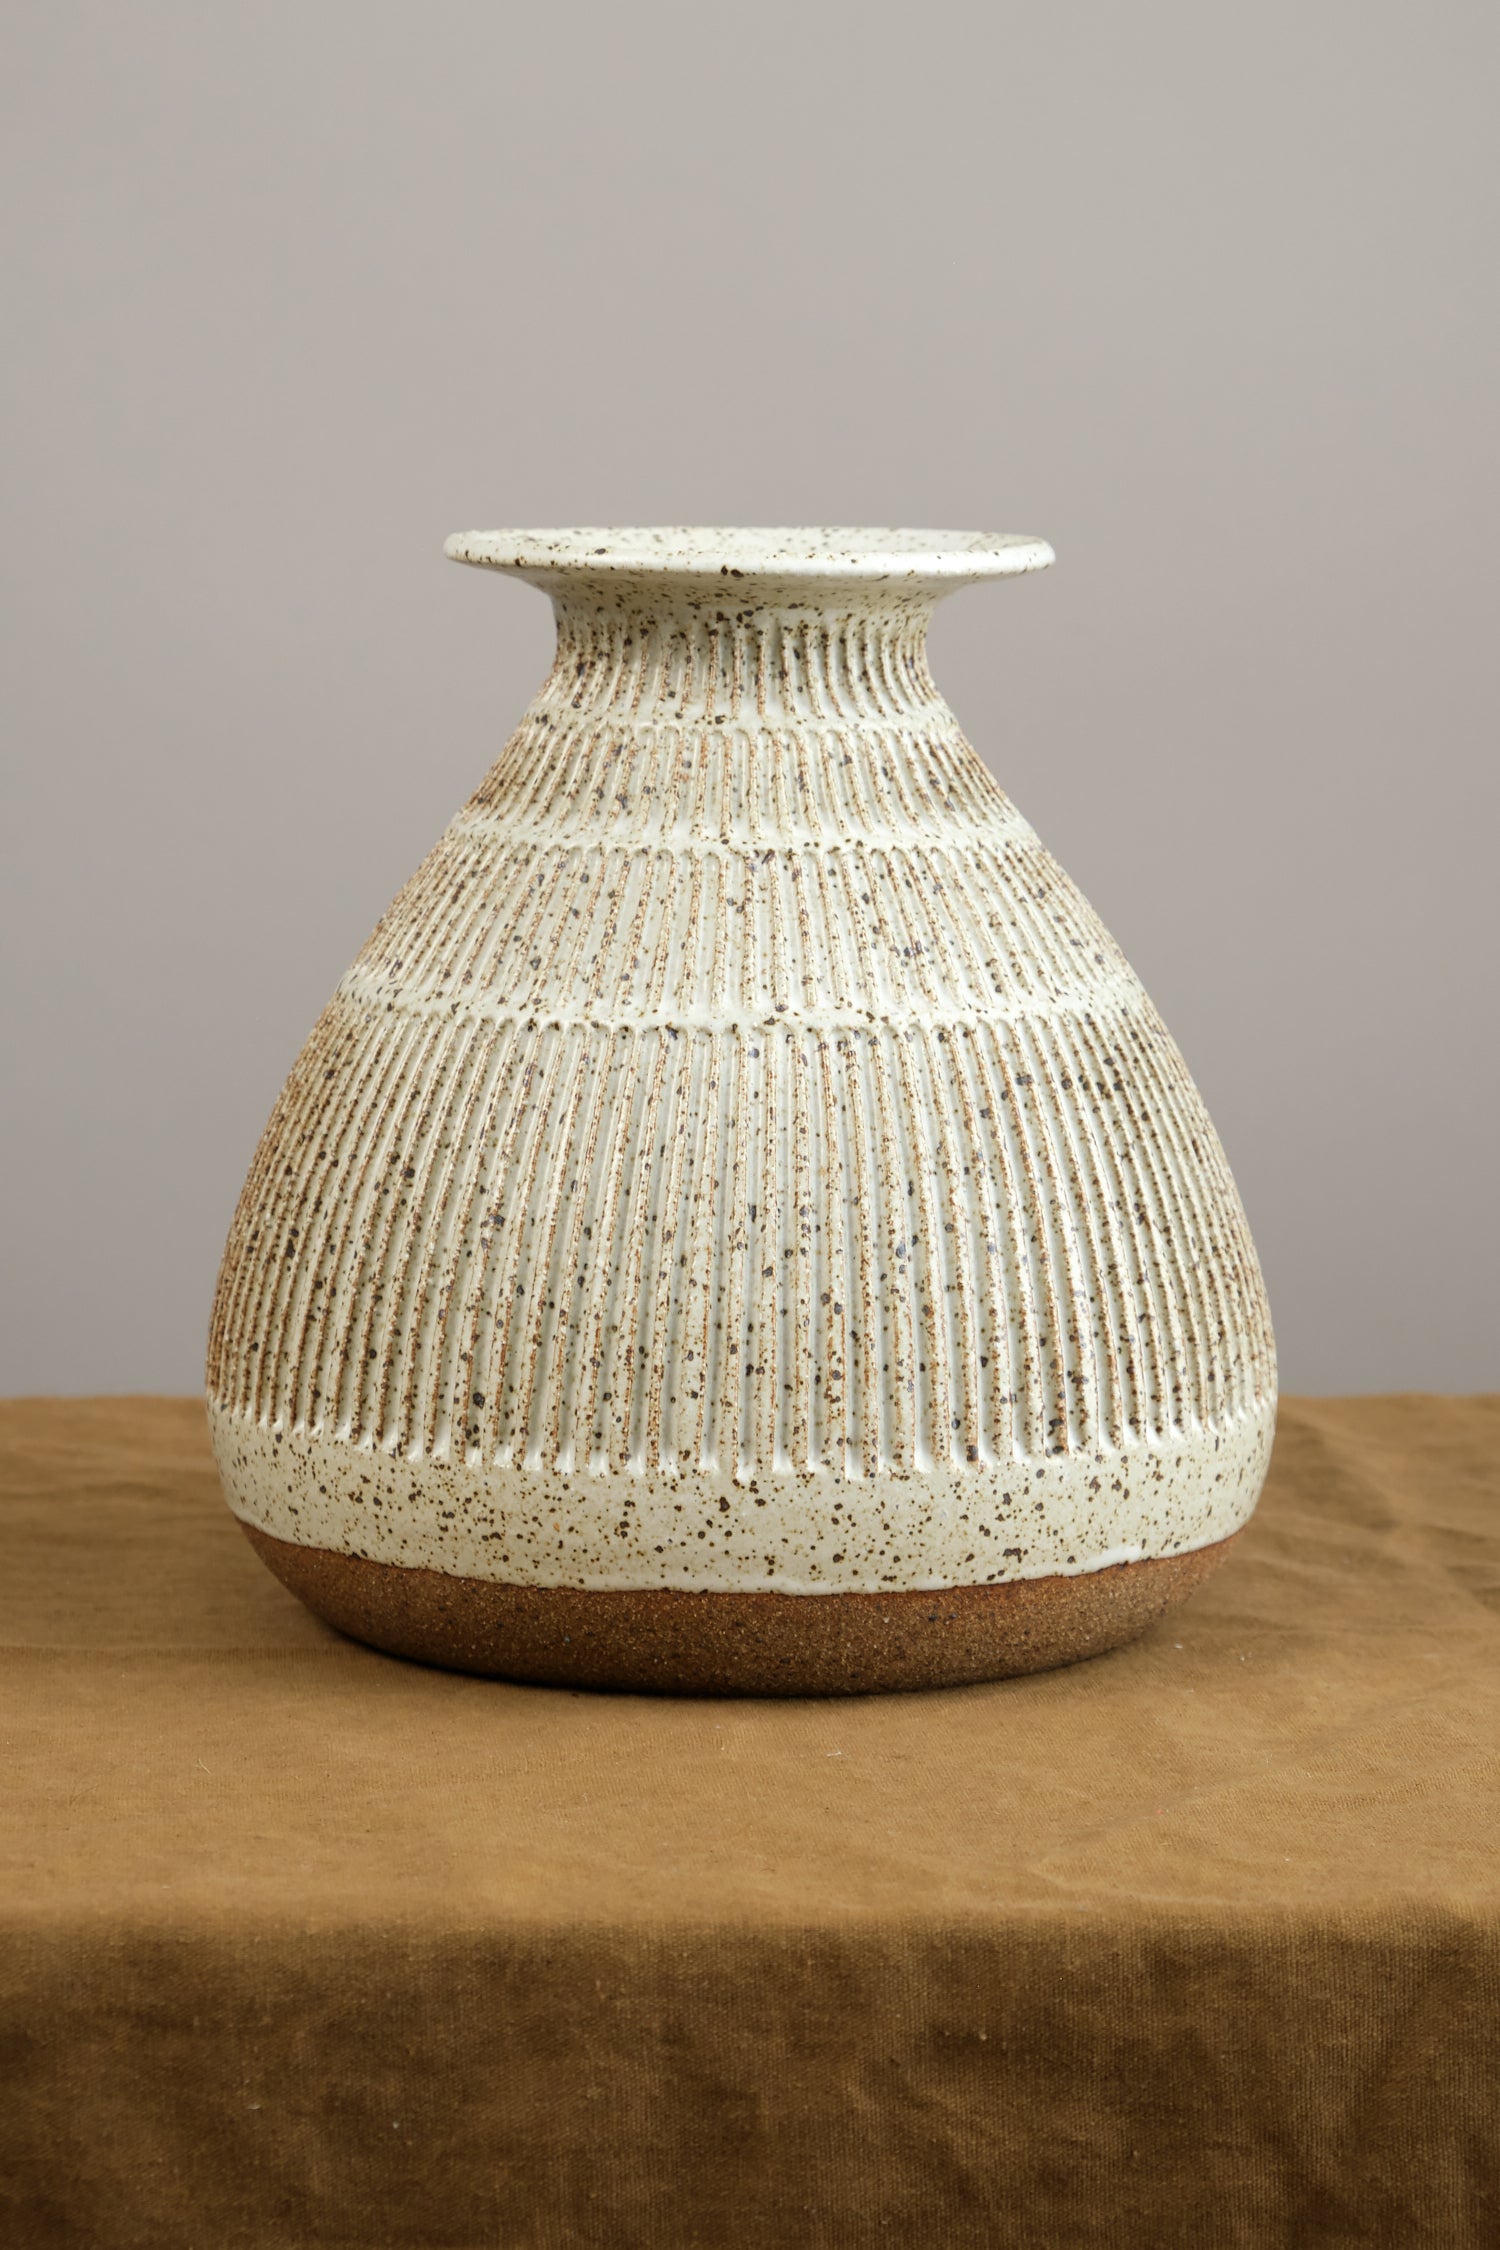 Hana Bulb Vase on table